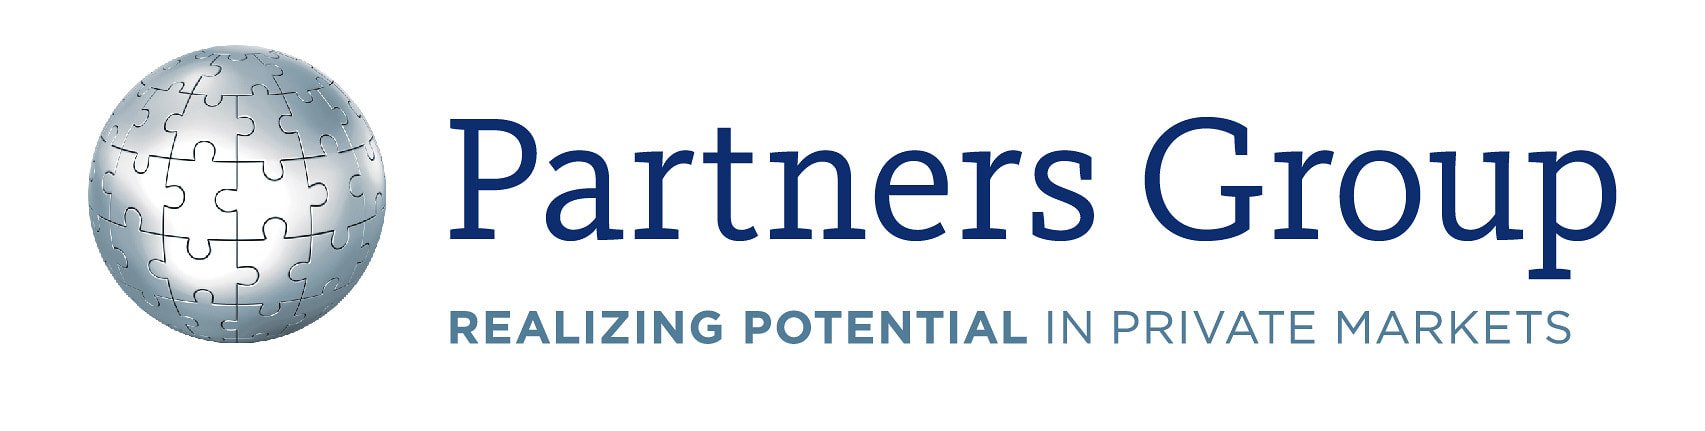 partners-group-logo.jpg